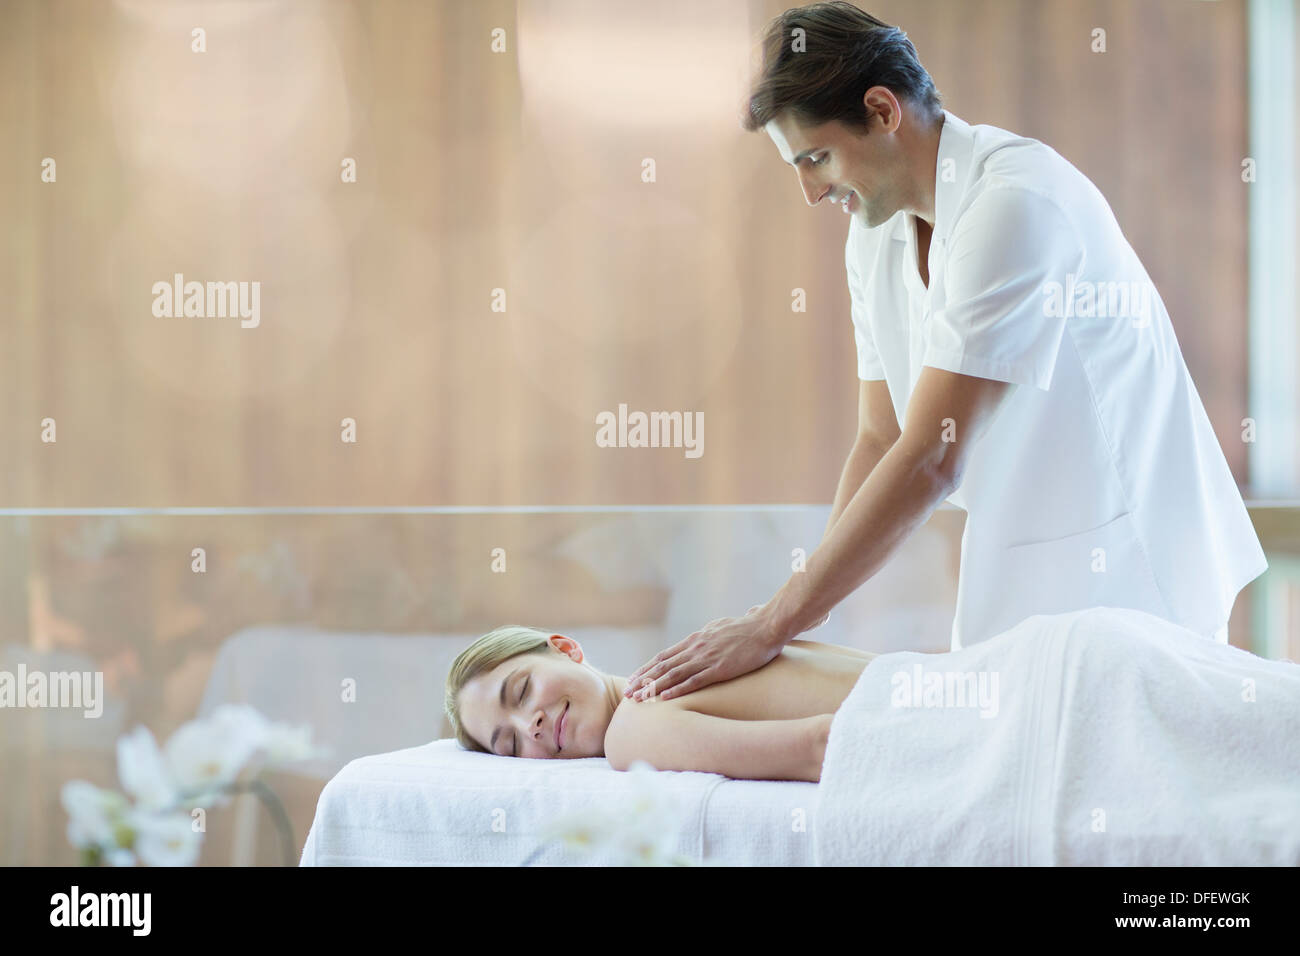 Woman receiving massage at spa Banque D'Images